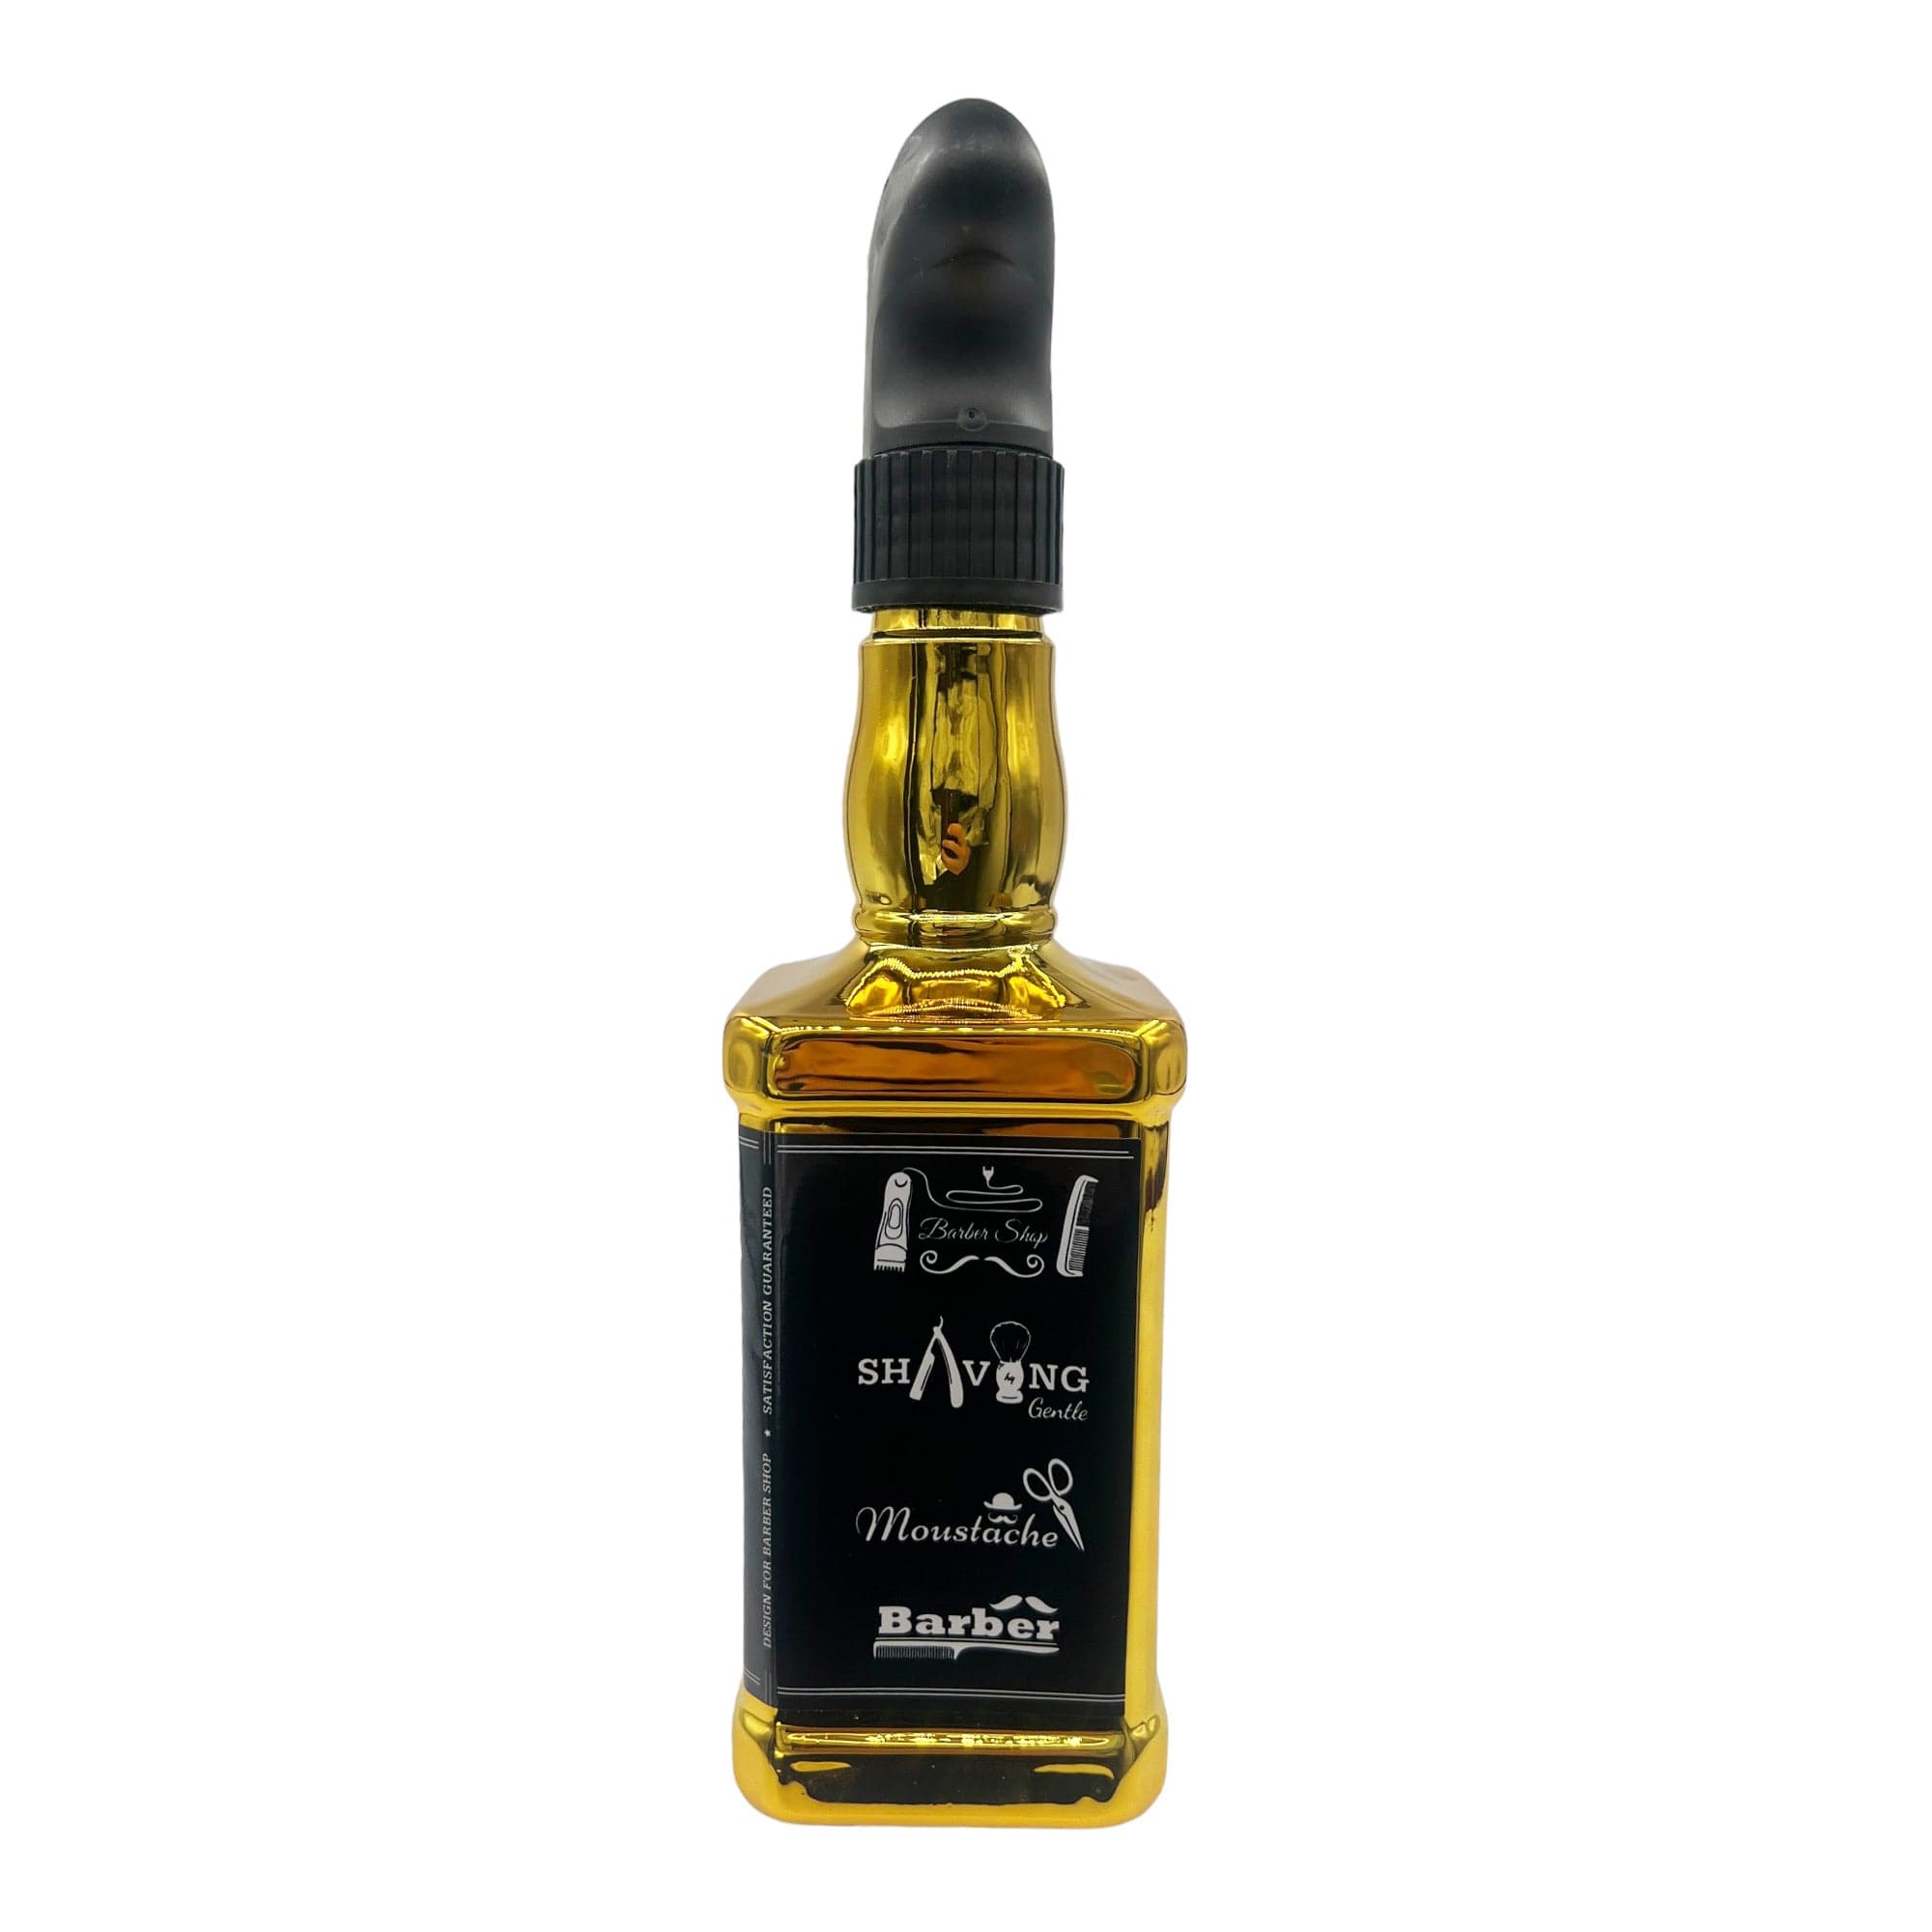 Eson - Water Spray Bottle 500ml Empty Refillable Ultra Fine Mist Sprayer (Gold) - Eson Direct